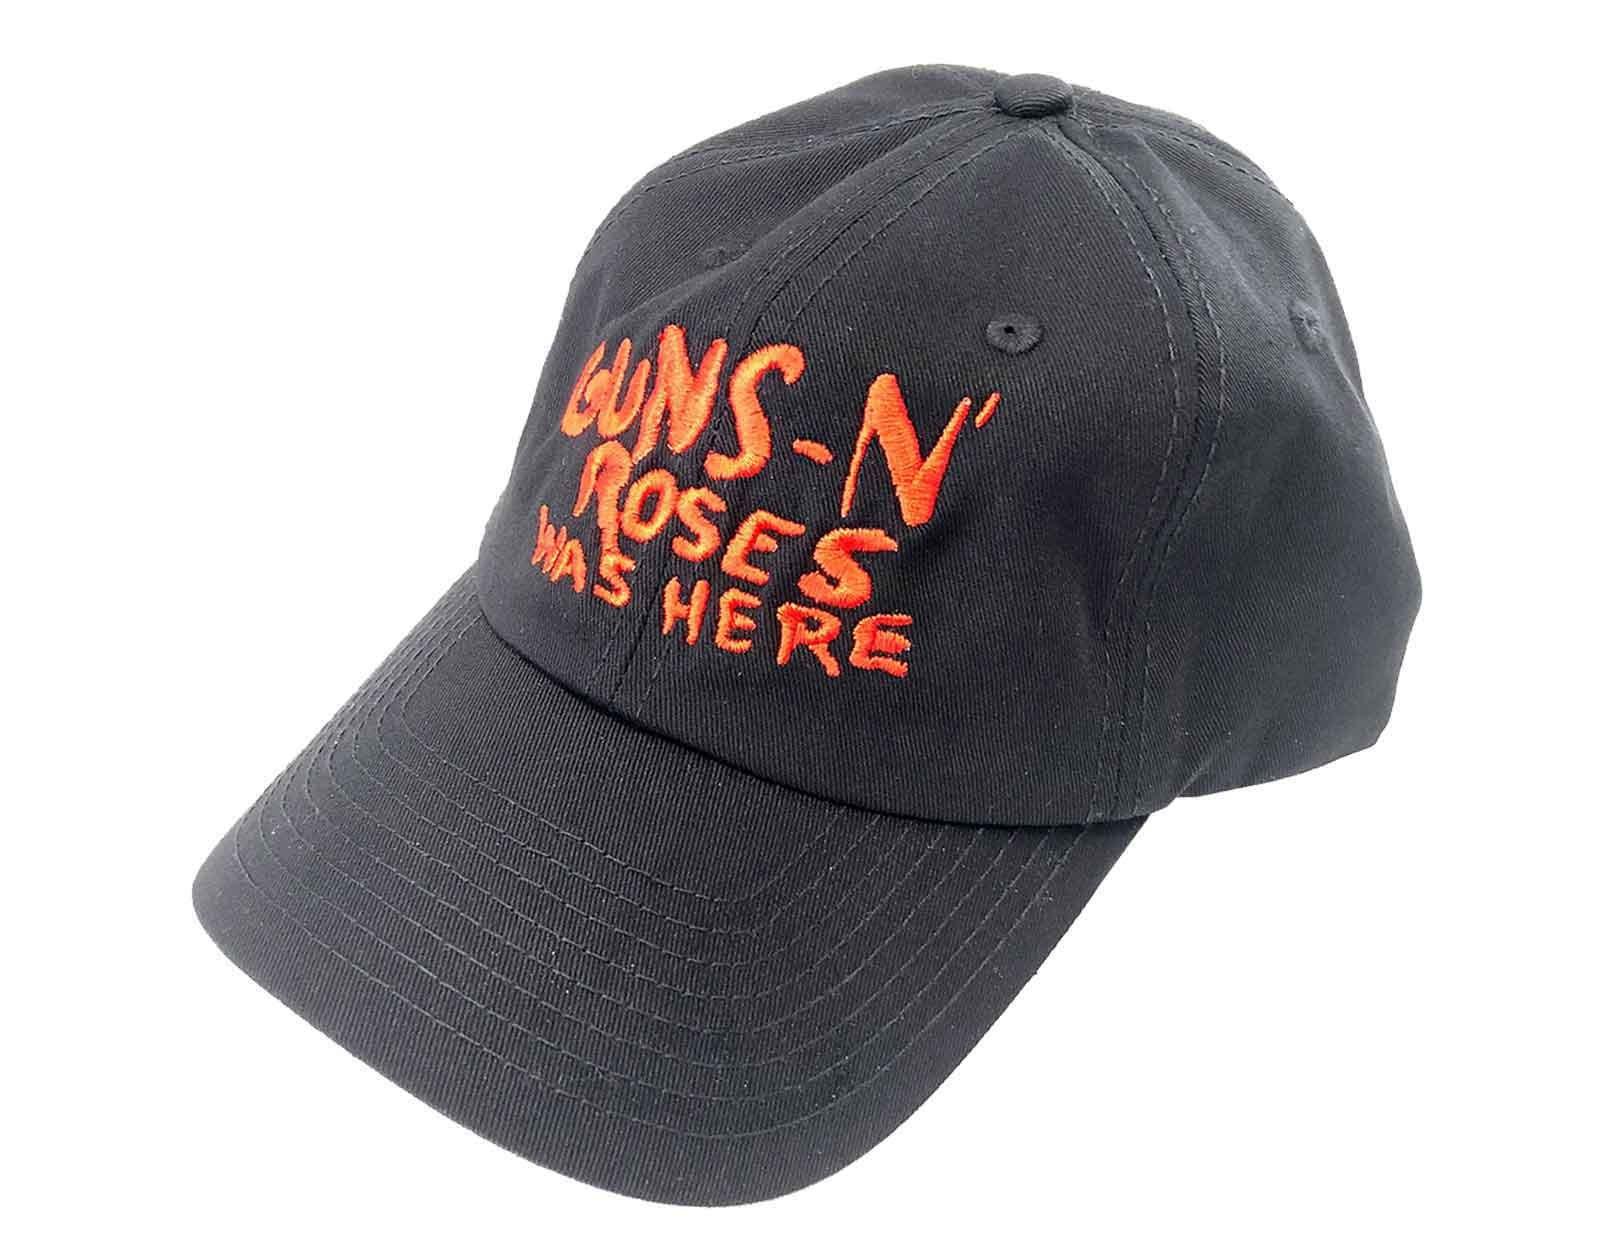 Бейсбольная кепка с логотипом группы Was Here Guns N Roses, черный бейсболка кепка камуфляжная с желтым принтом guns n’ roses 88